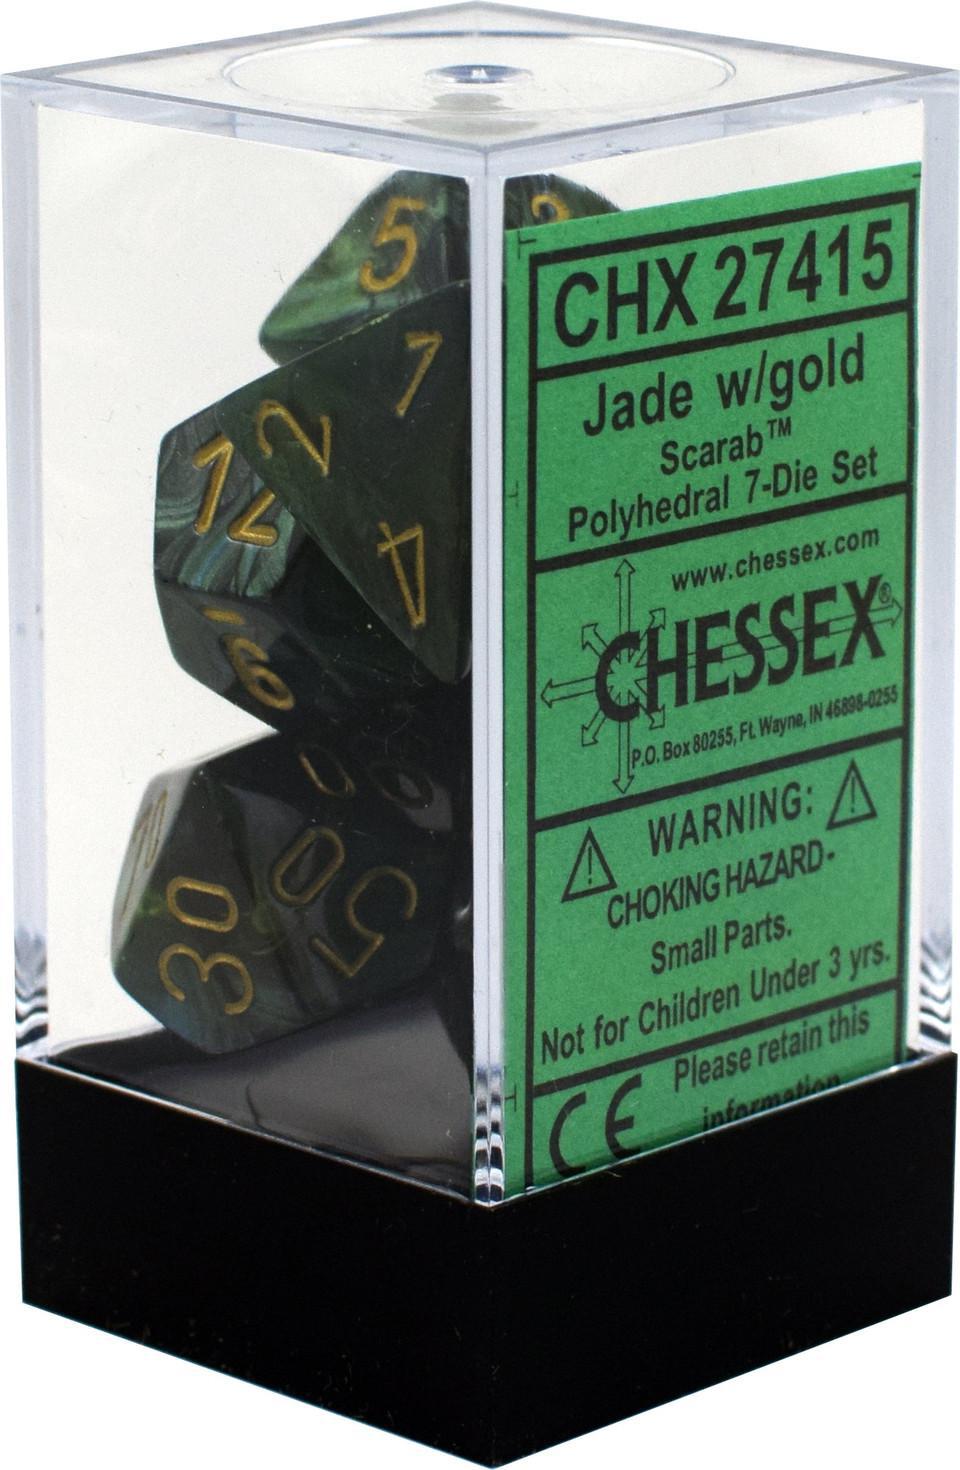 Chessex - Dice - 27415